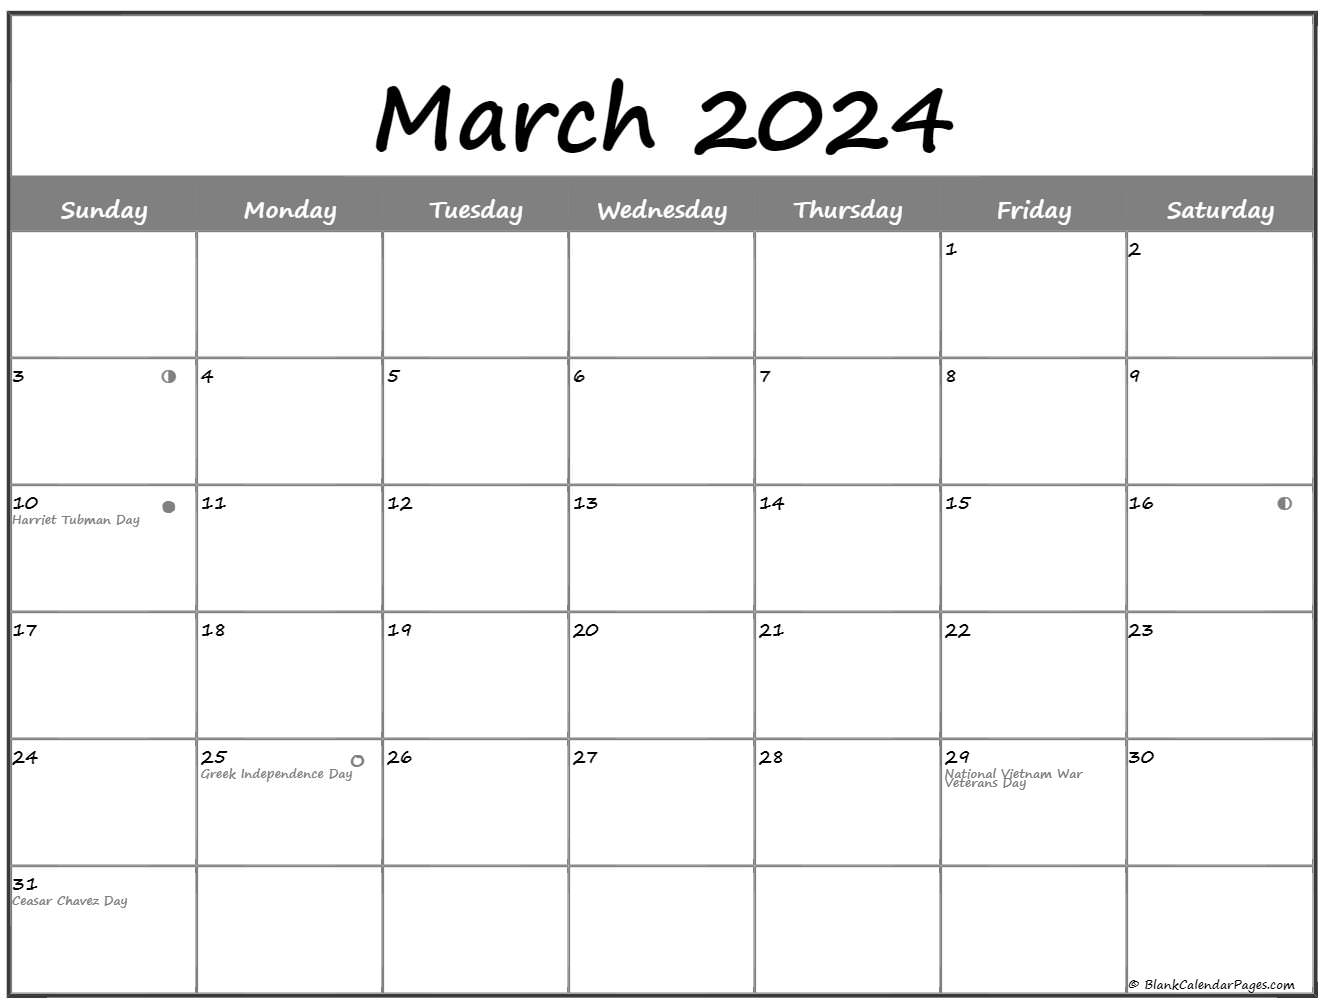 March 2019 Lunar Calendar